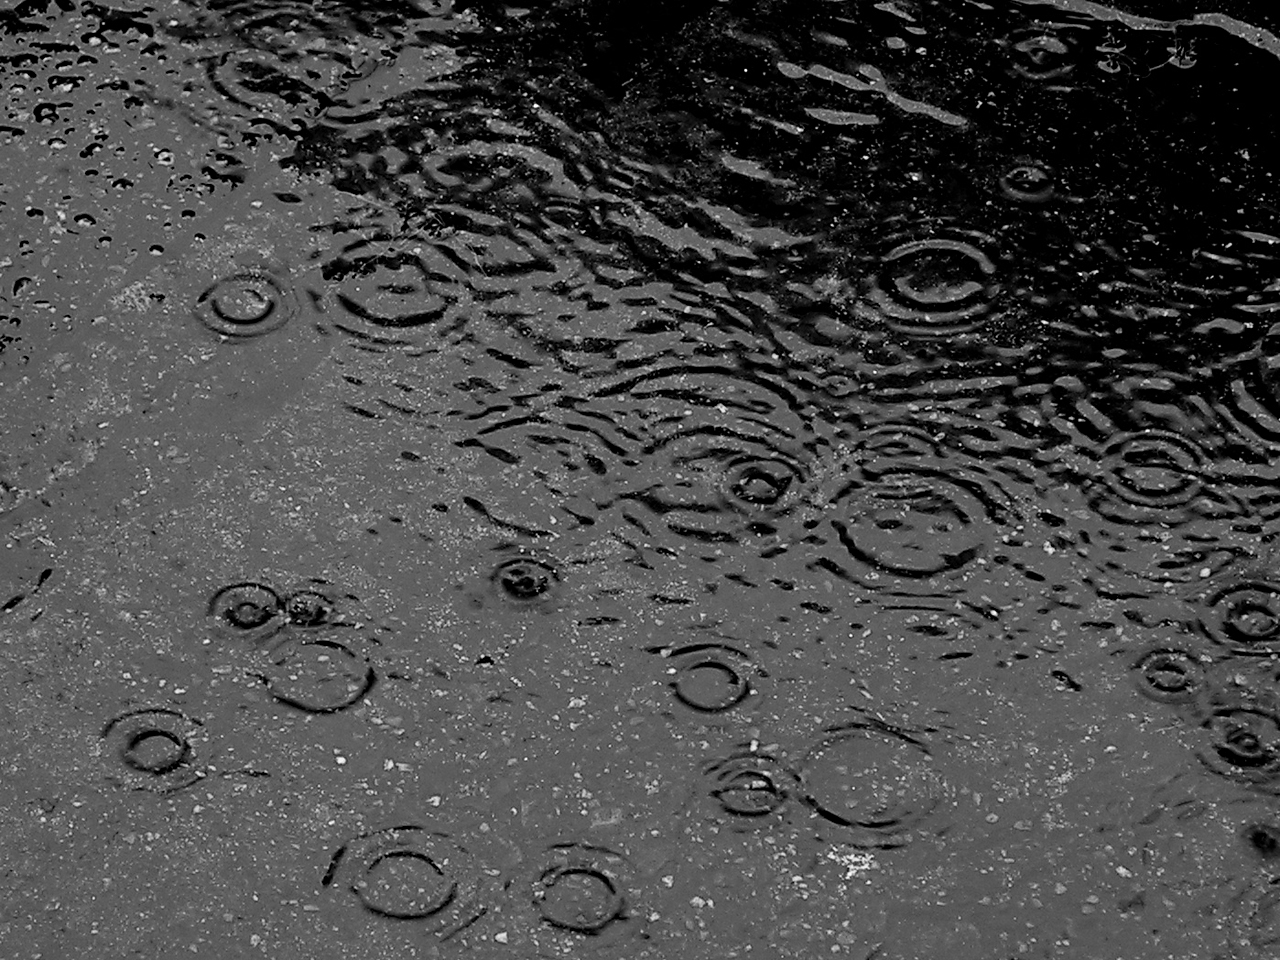 http://muslimsein.files.wordpress.com/2010/01/here_comes_rain_again1.jpg